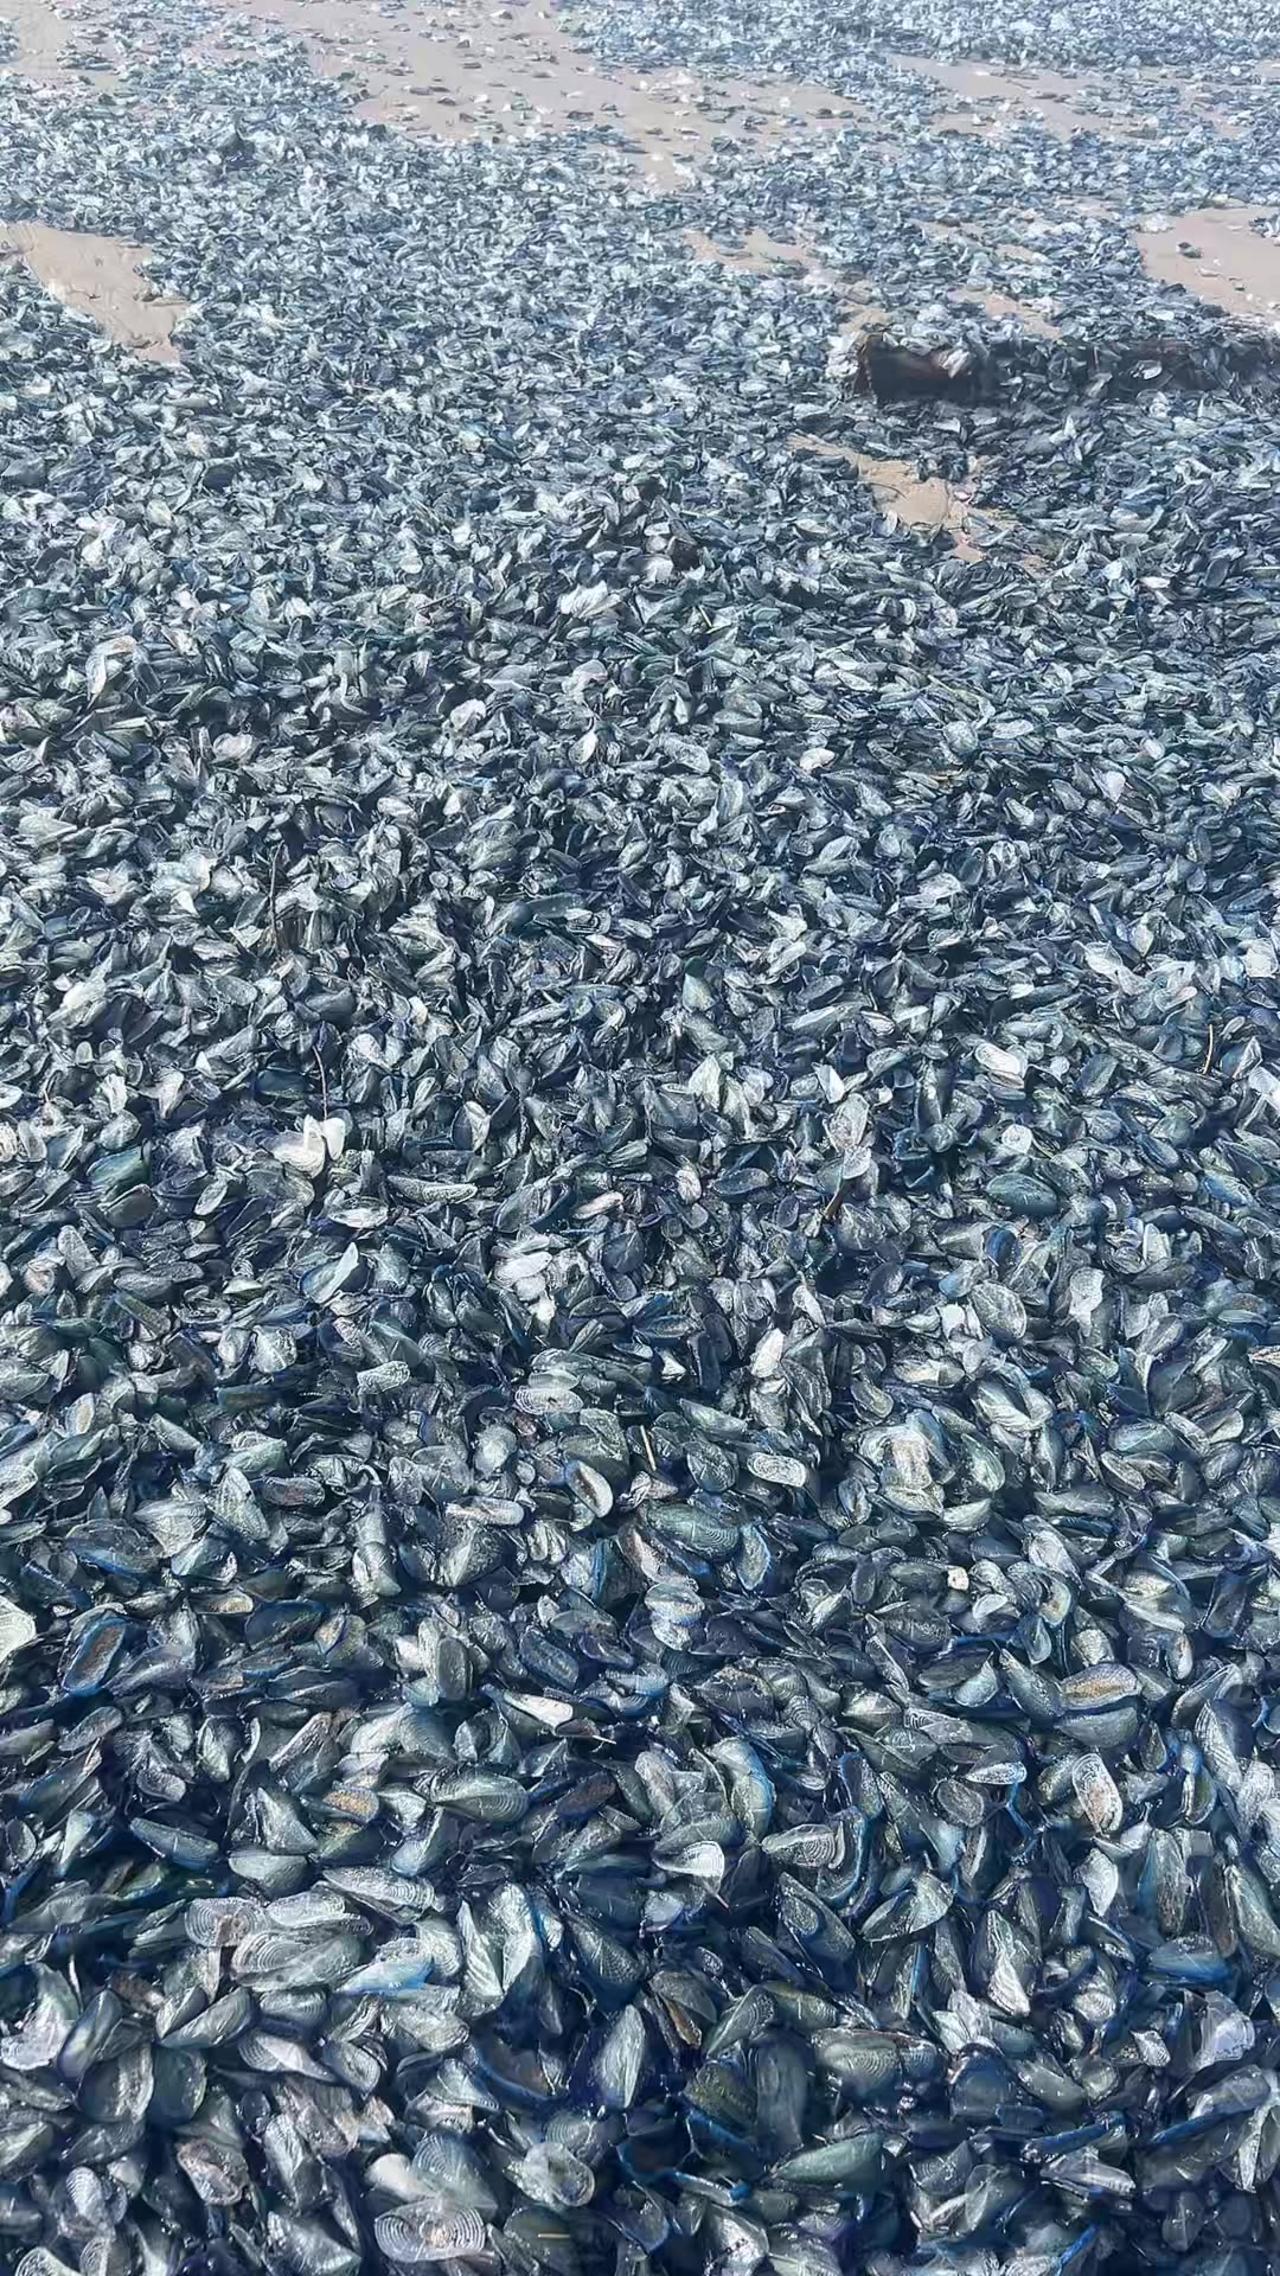 Millions of Small Blue Creatures Wash Up On Oregon Coast